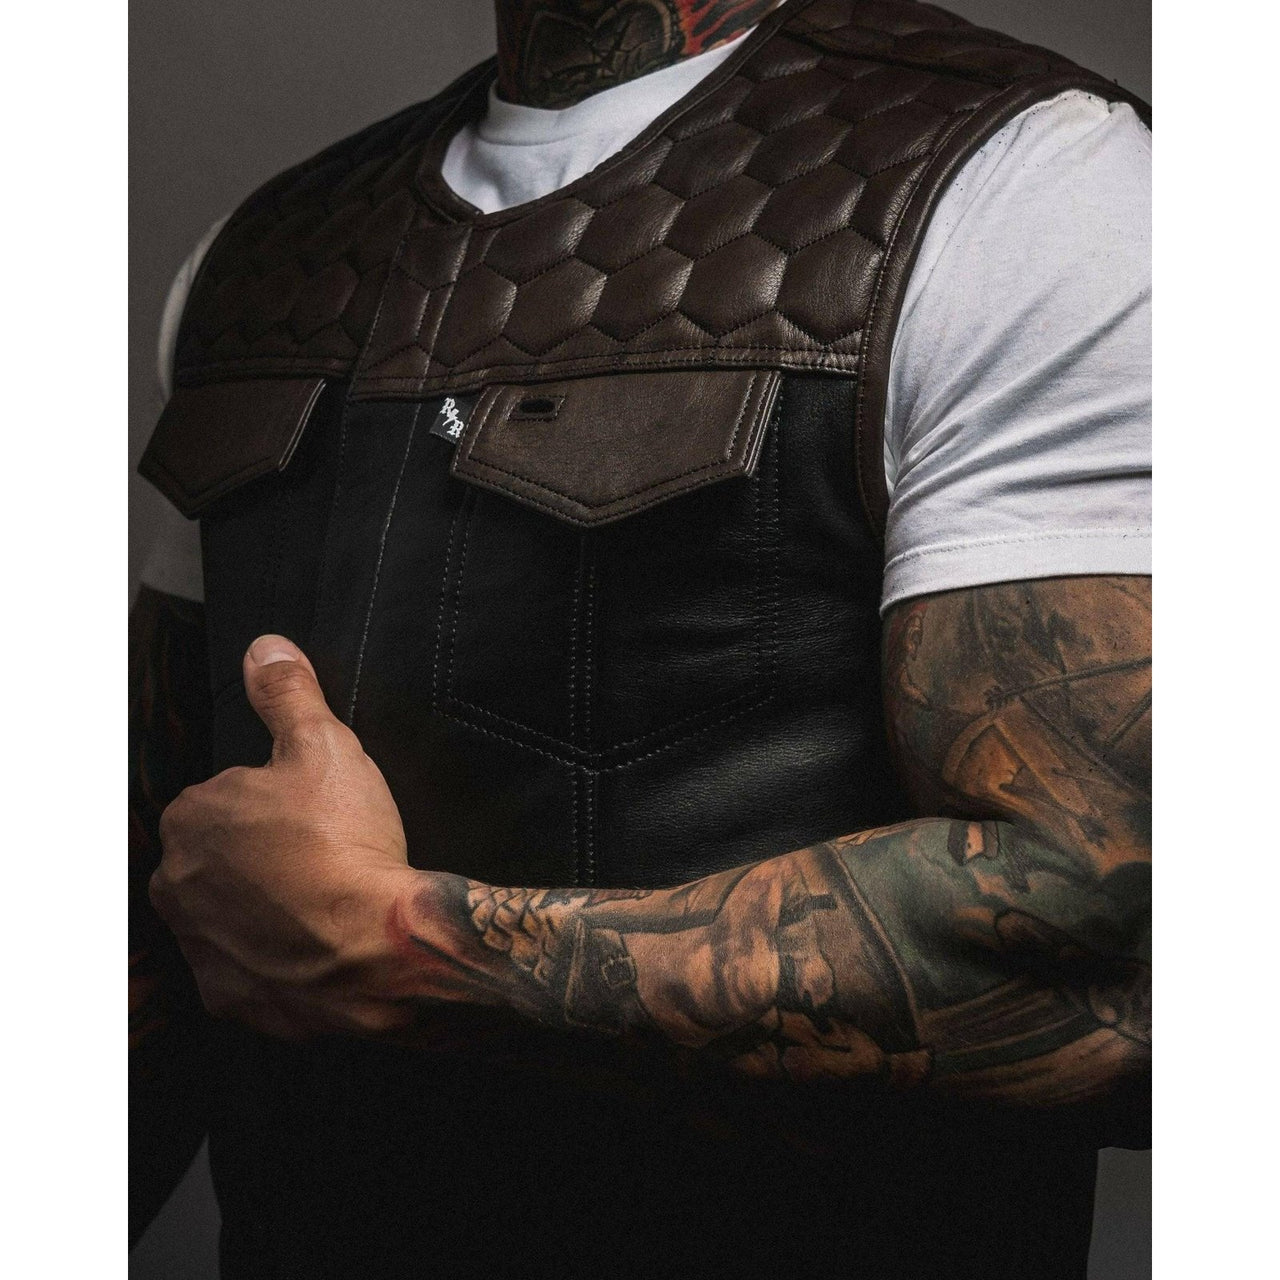 Harvester of Dusk Brown Leather Mens Vest - Rebel Reaper Clothing Company Men's Vest